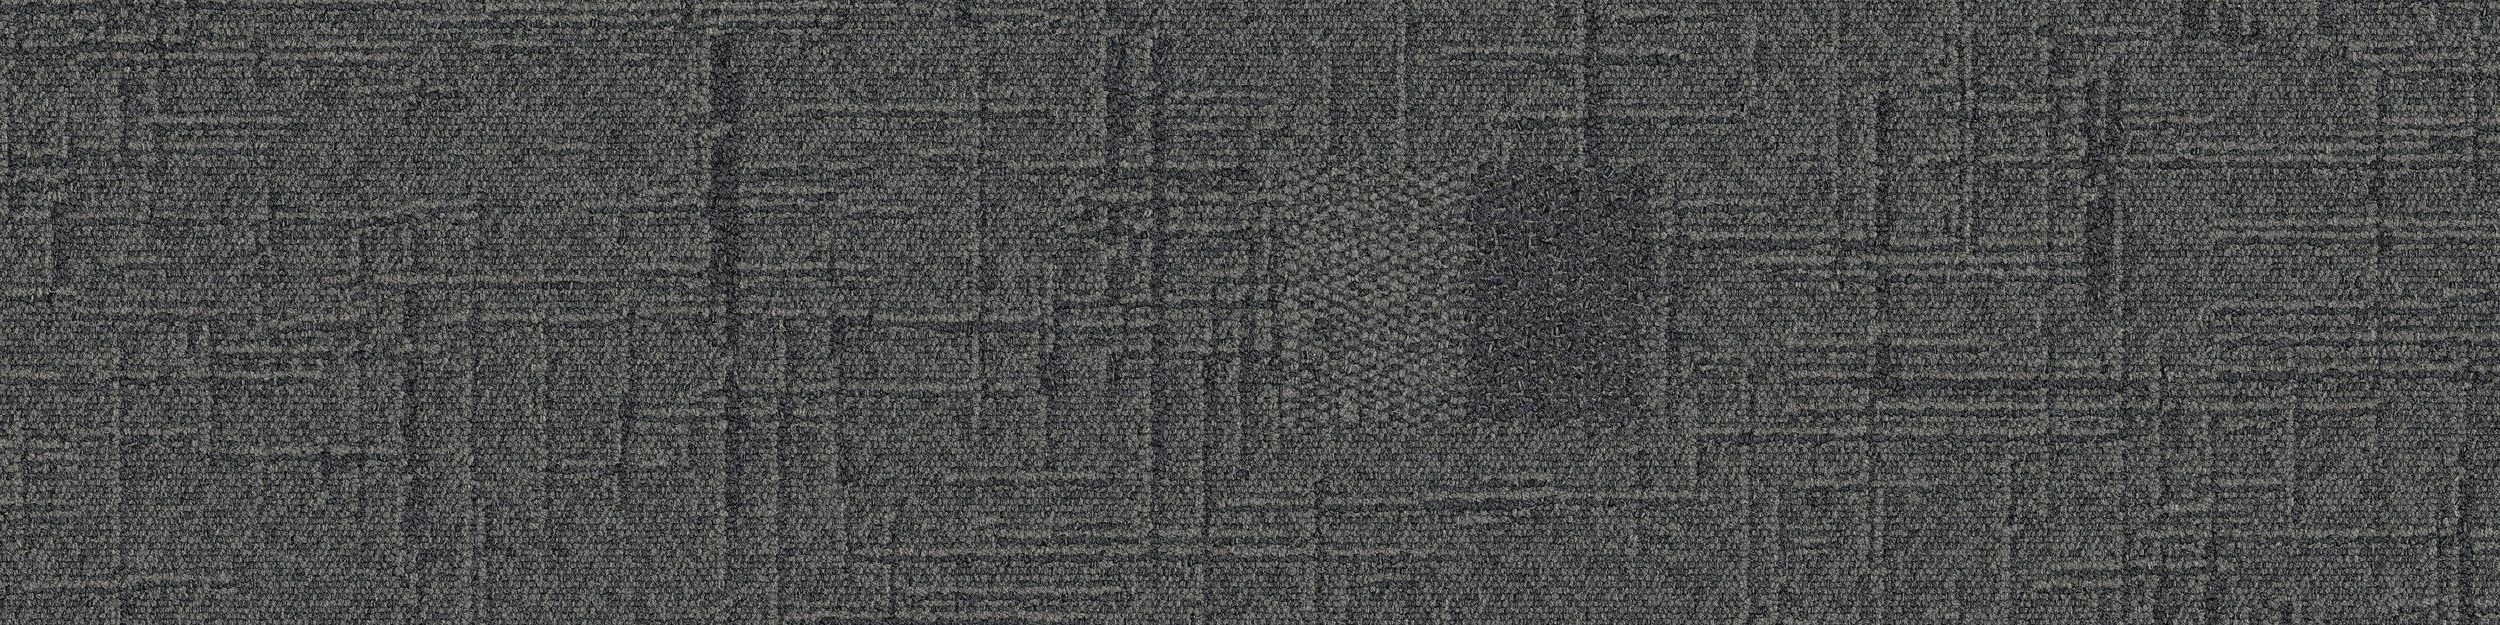 Vintage Kimono Carpet Tile In Coal número de imagen 2